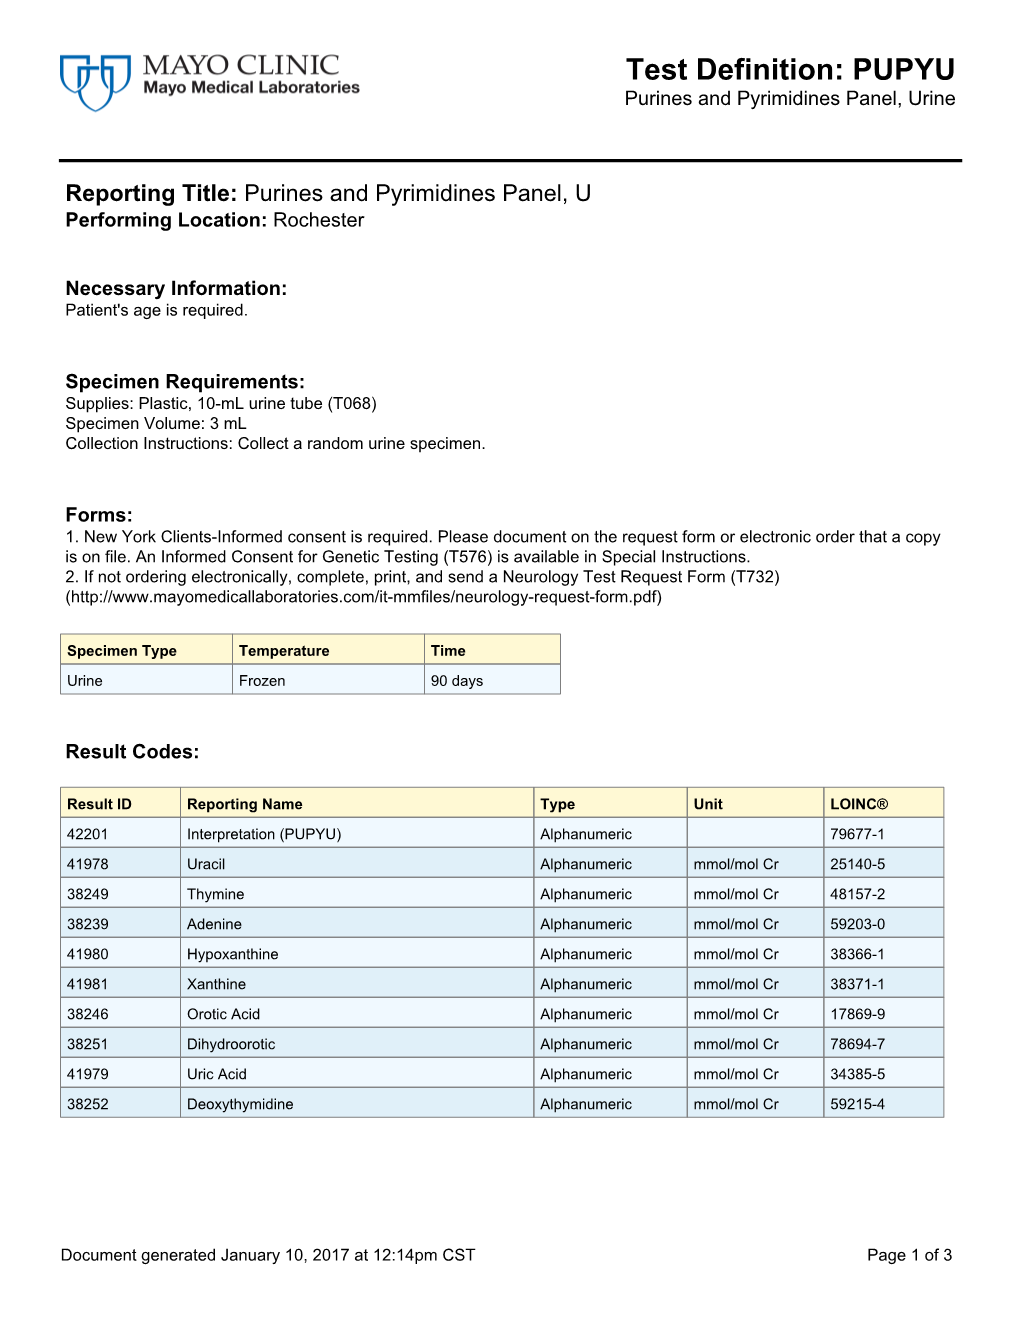 Test Definition: PUPYU Purines and Pyrimidines Panel, Urine